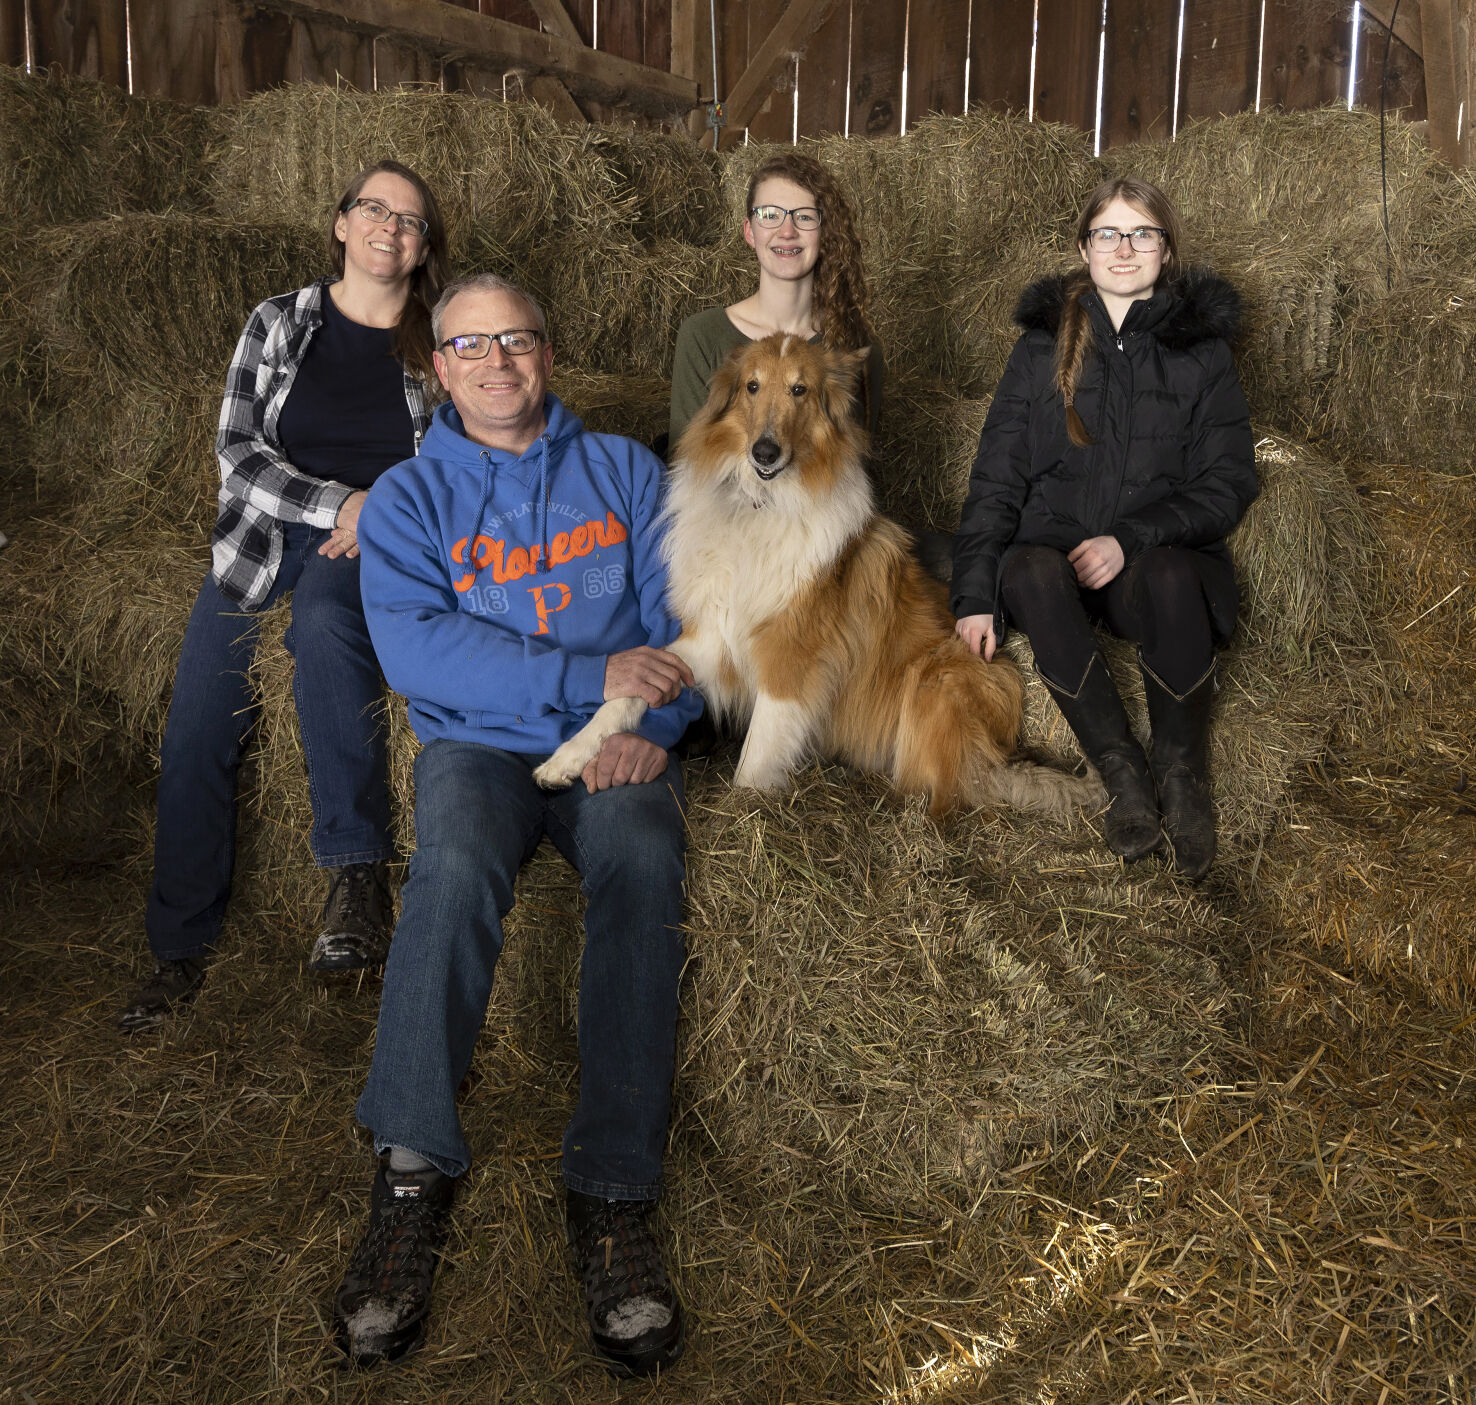 The Kilian family (from left): Melissa; Kerwin; Caroline, 15; Clara, 17; and dog Pal.    PHOTO CREDIT: Stephen Gassman
Telegraph Herald